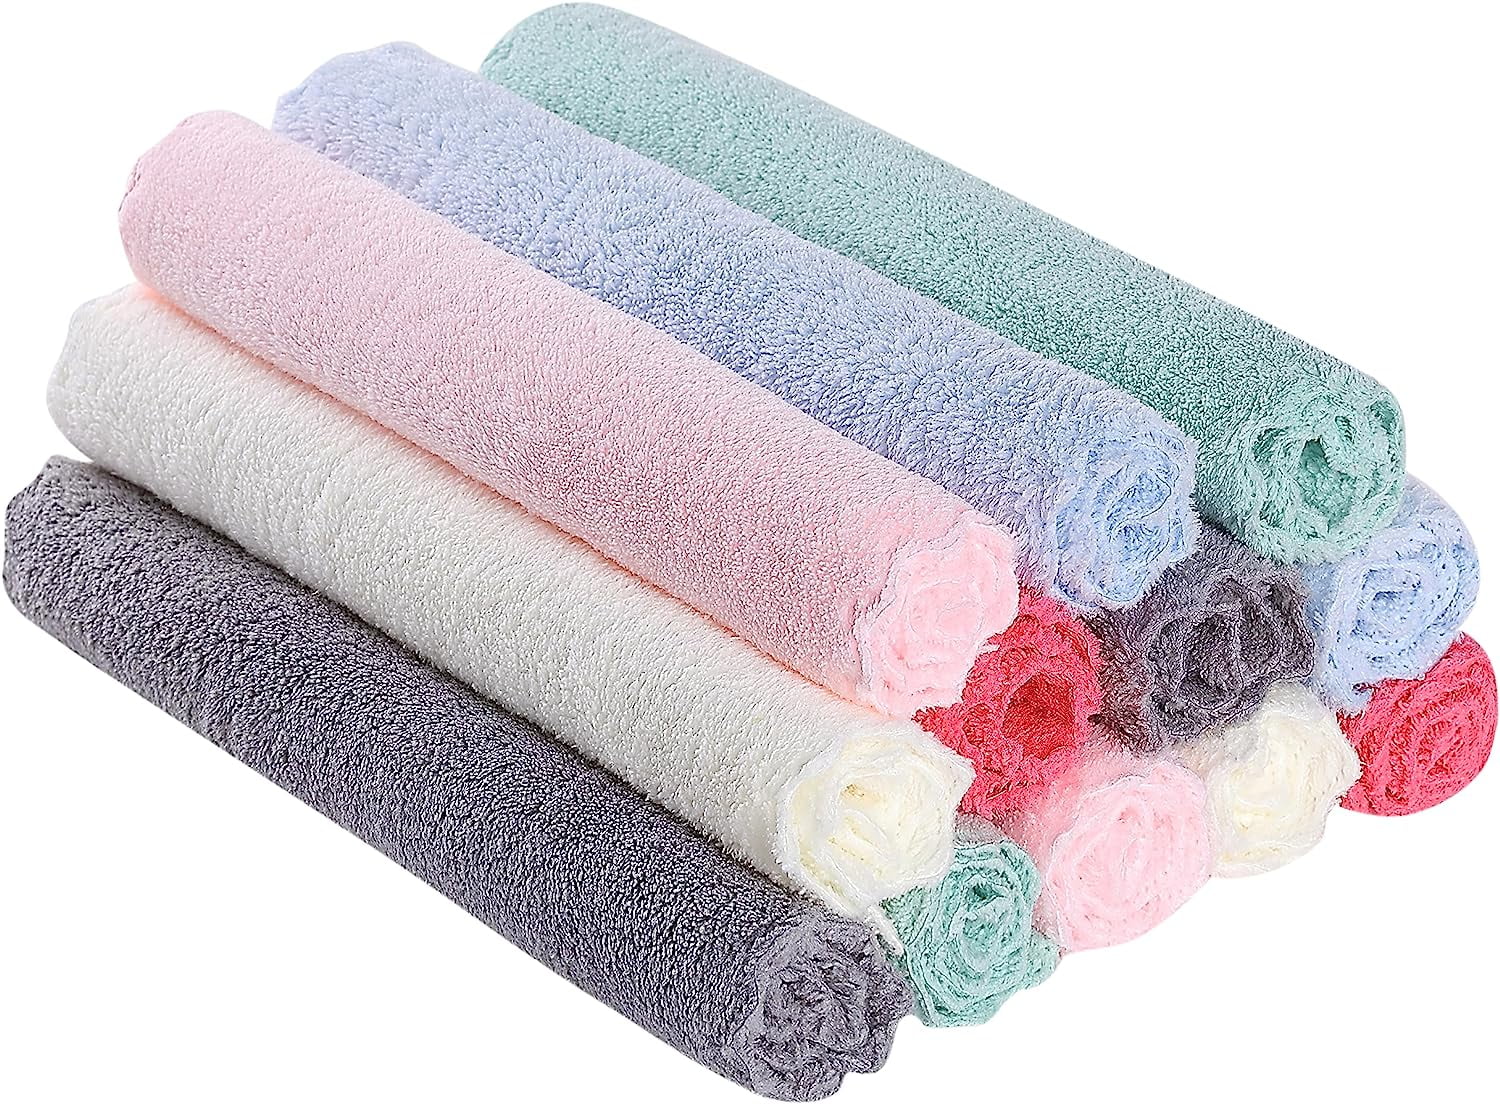 Small Gauze Washcloth / Newborn Washcloth / 7X7 MULTIPLE COLORS AVAILABLE